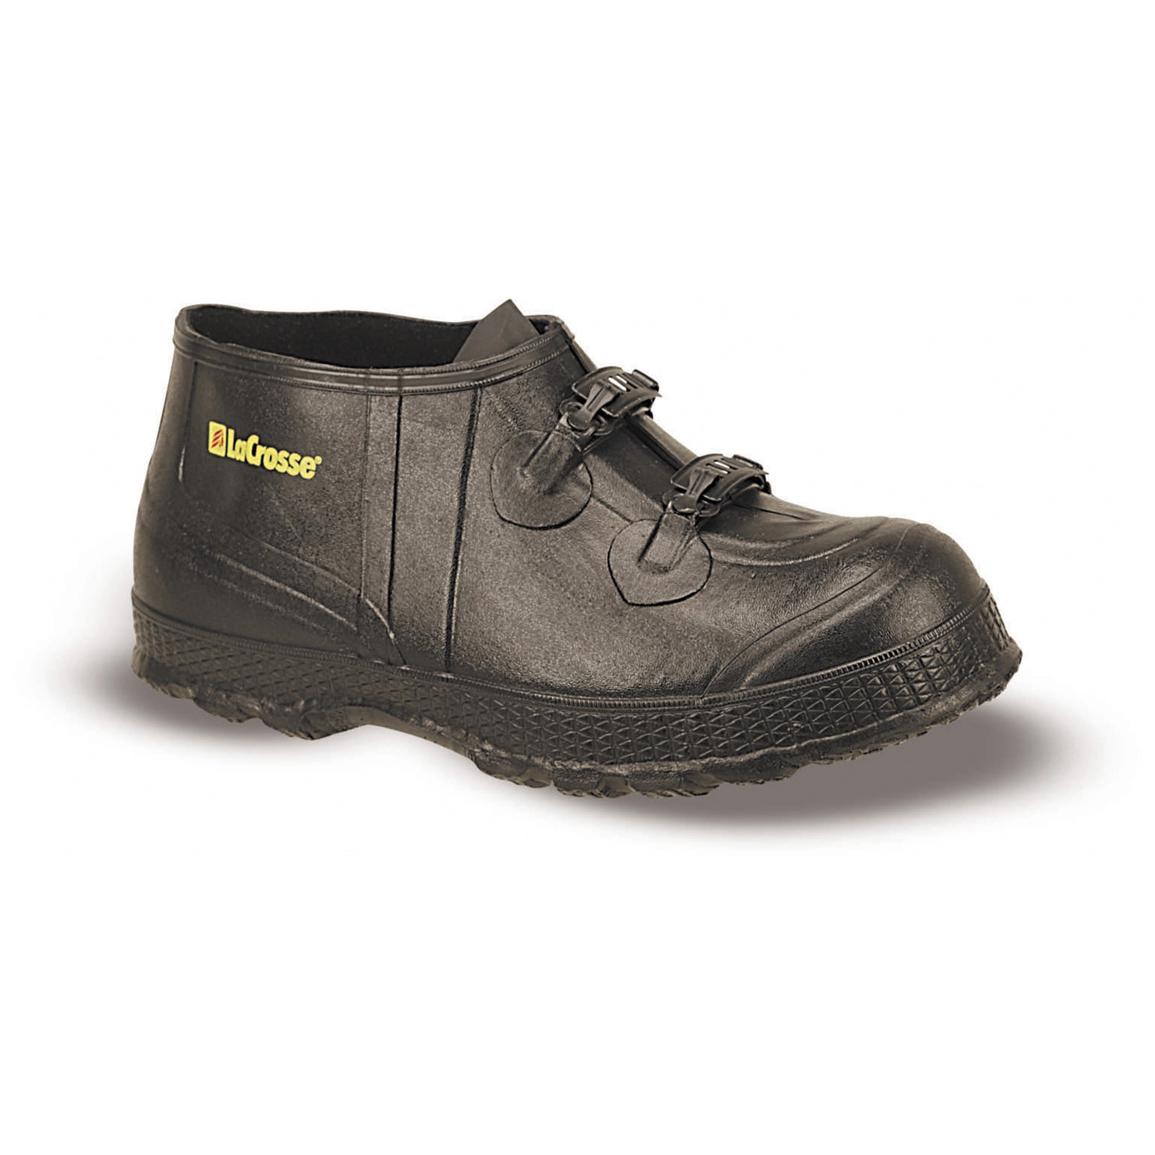 Men's LaCrosse® 5 inch Z-Series Overshoe Work Boots, Black